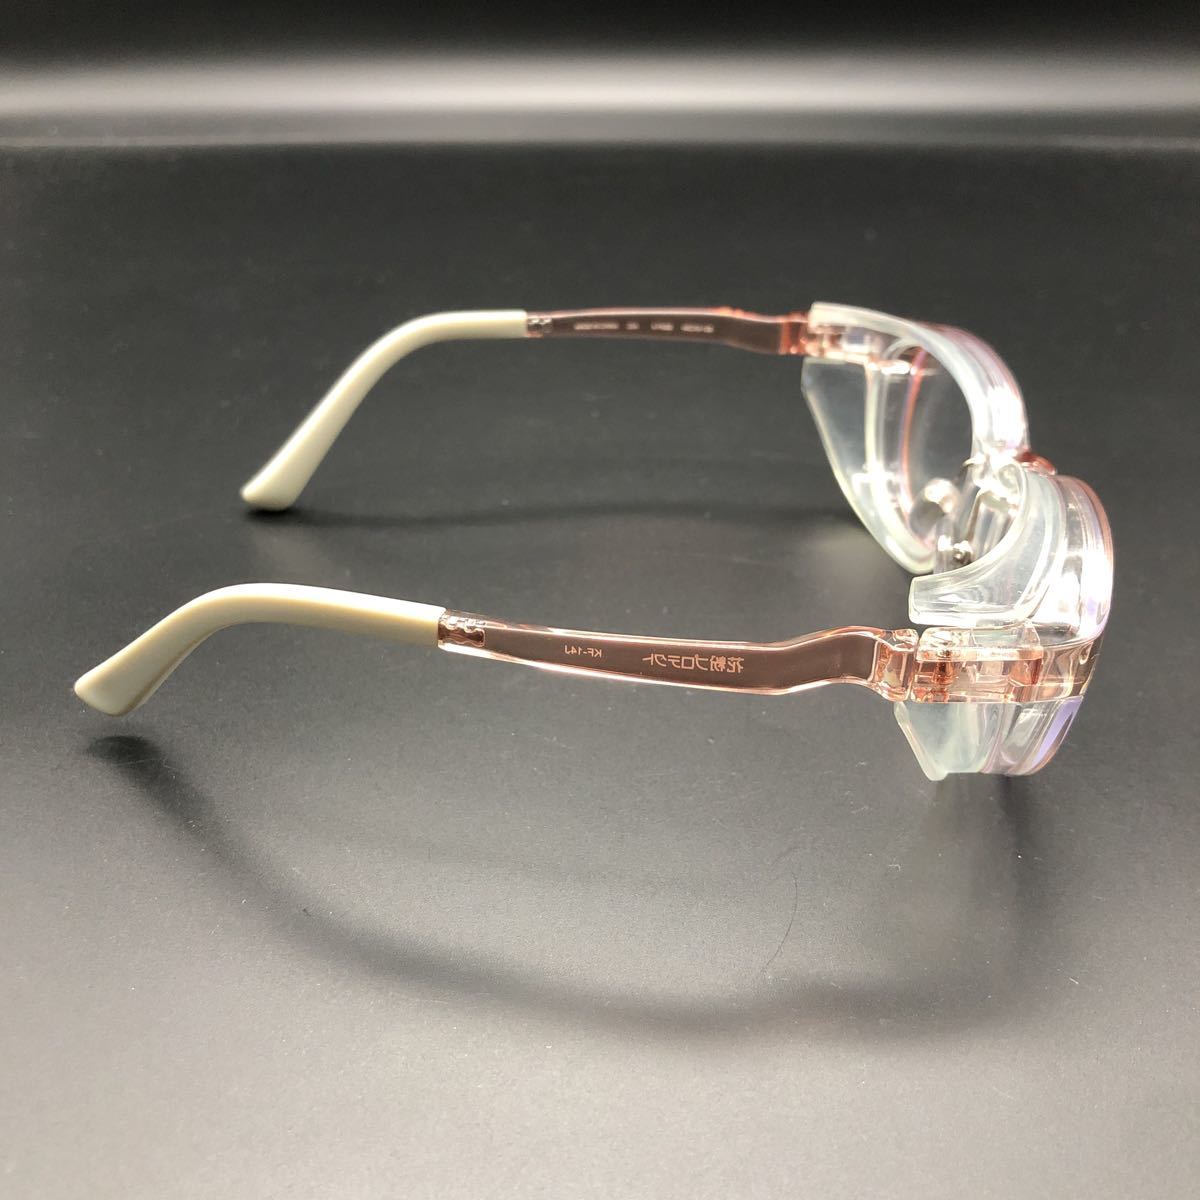  prompt decision pollen protect glasses glasses KF-14J